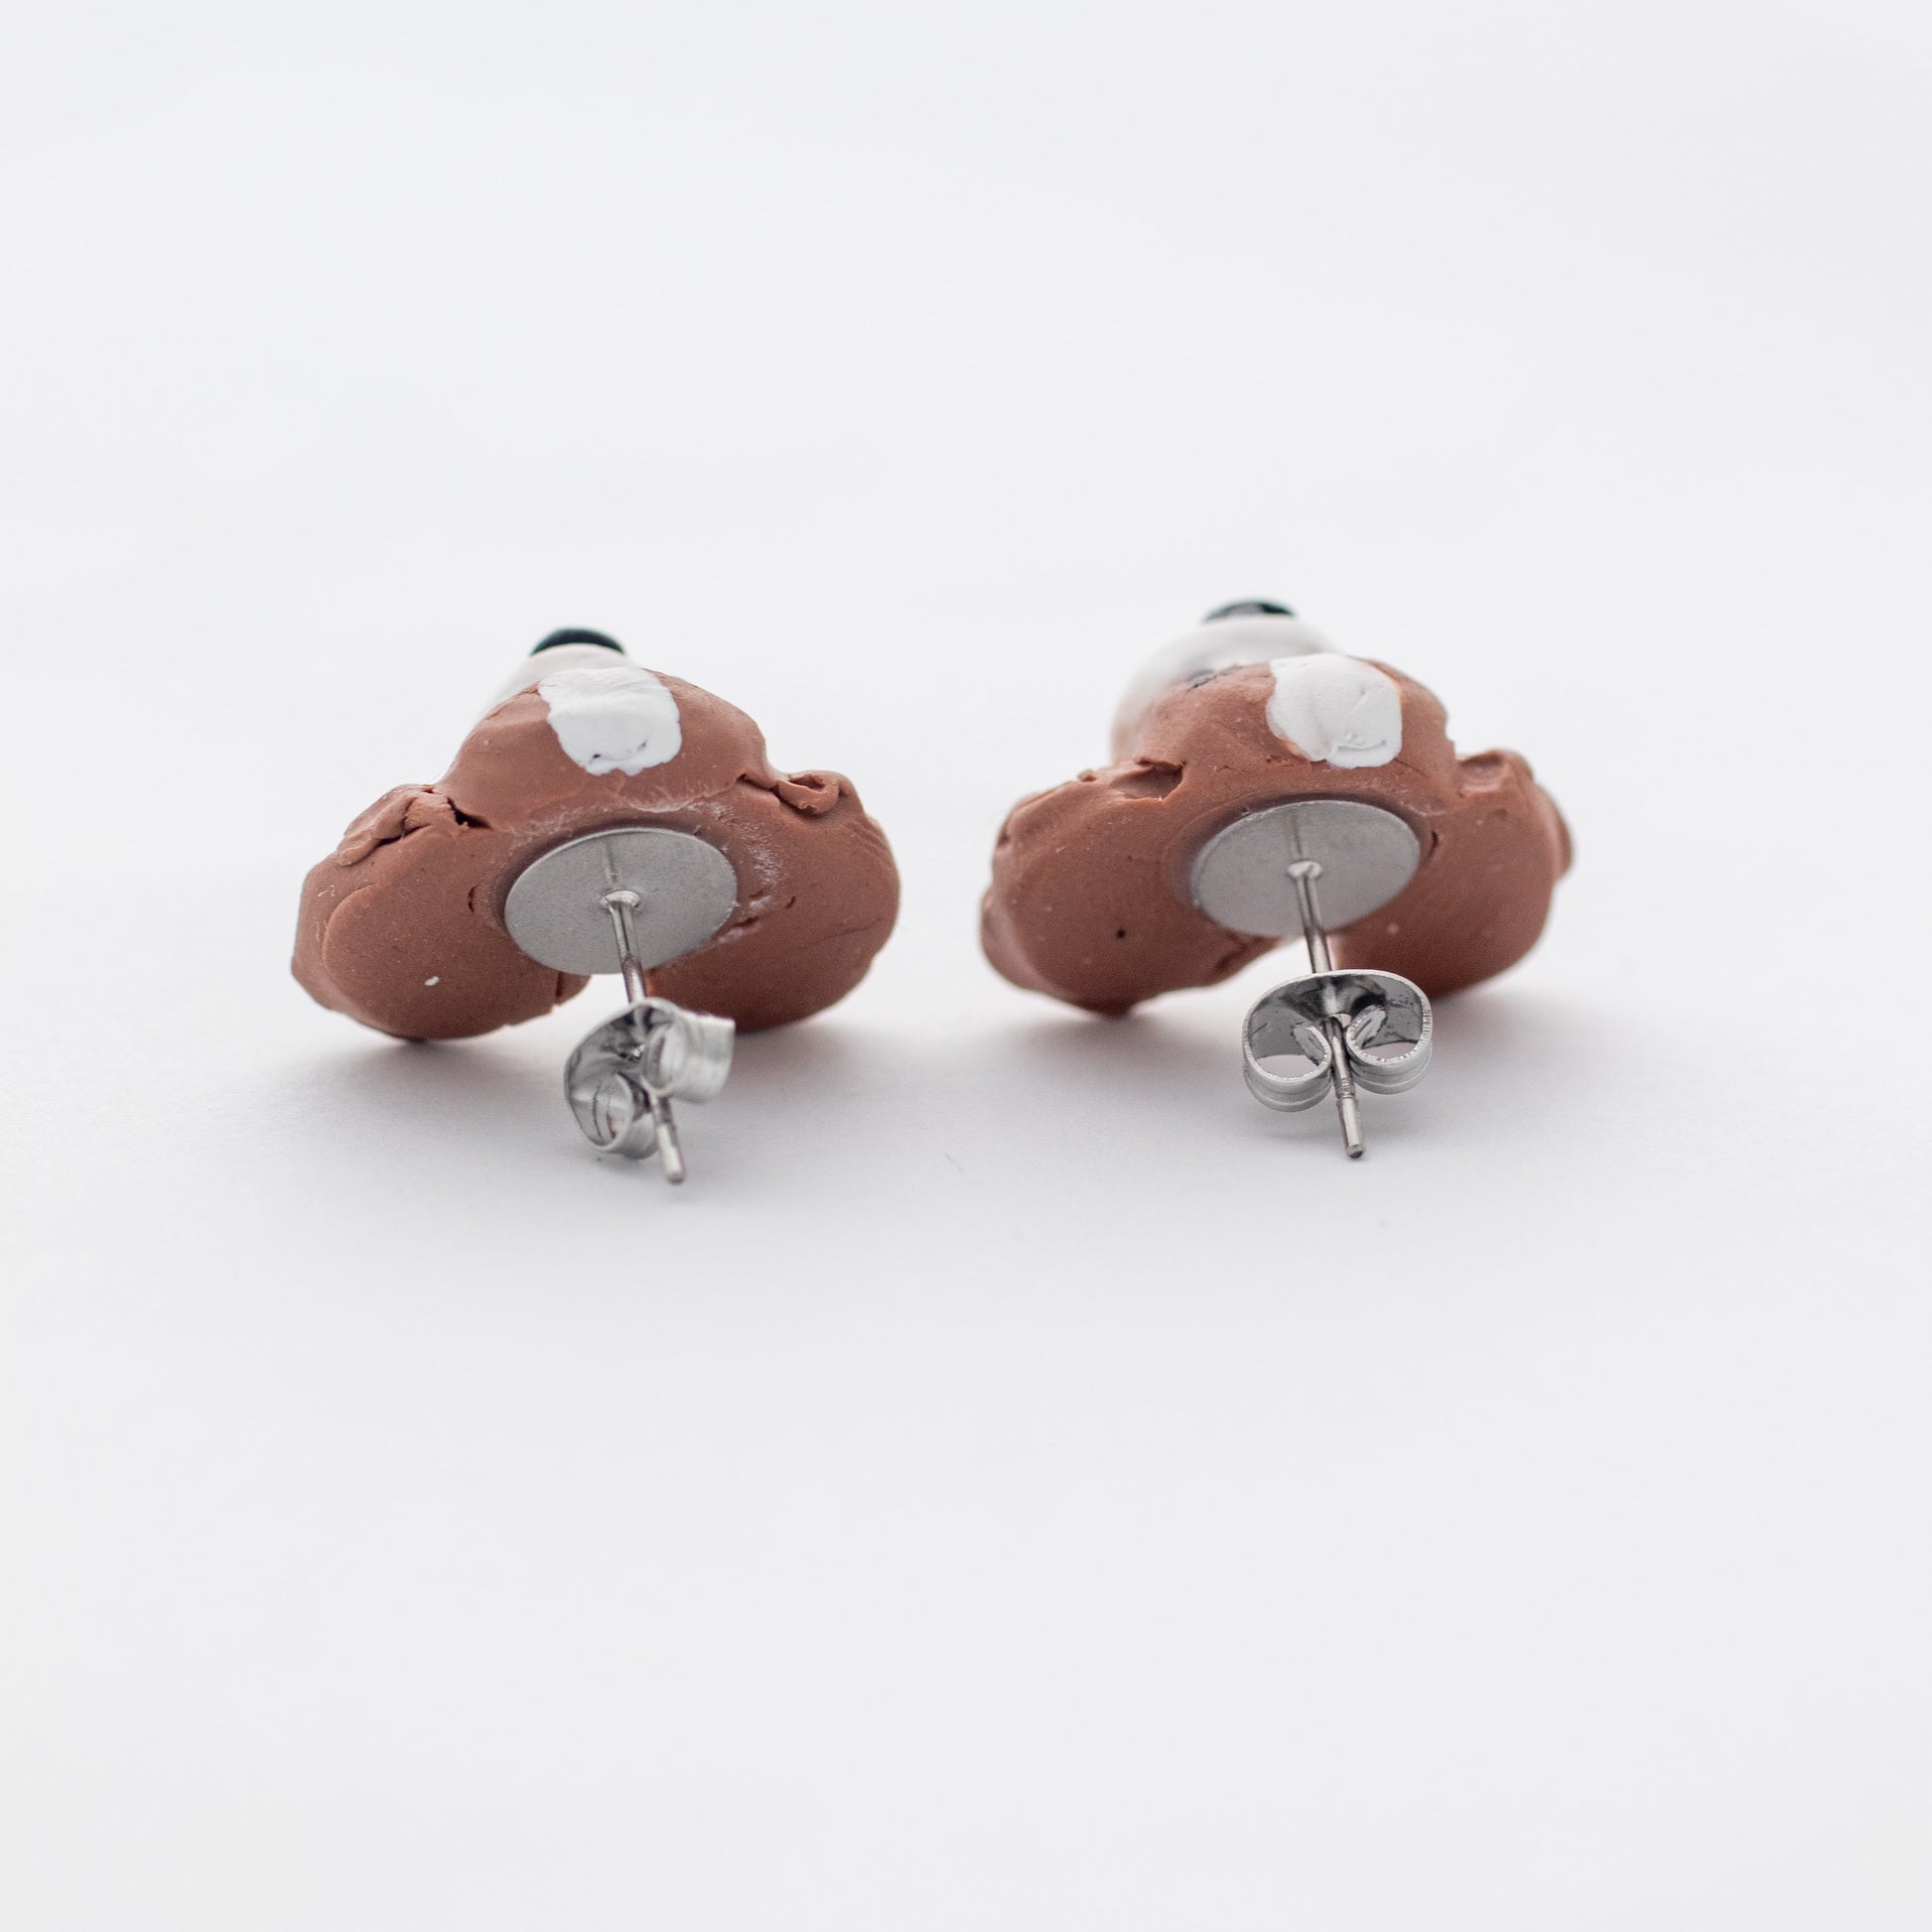 Handmade polymer clay cavalier king charles spaniel stud earrings surgical steel backs shown on white background